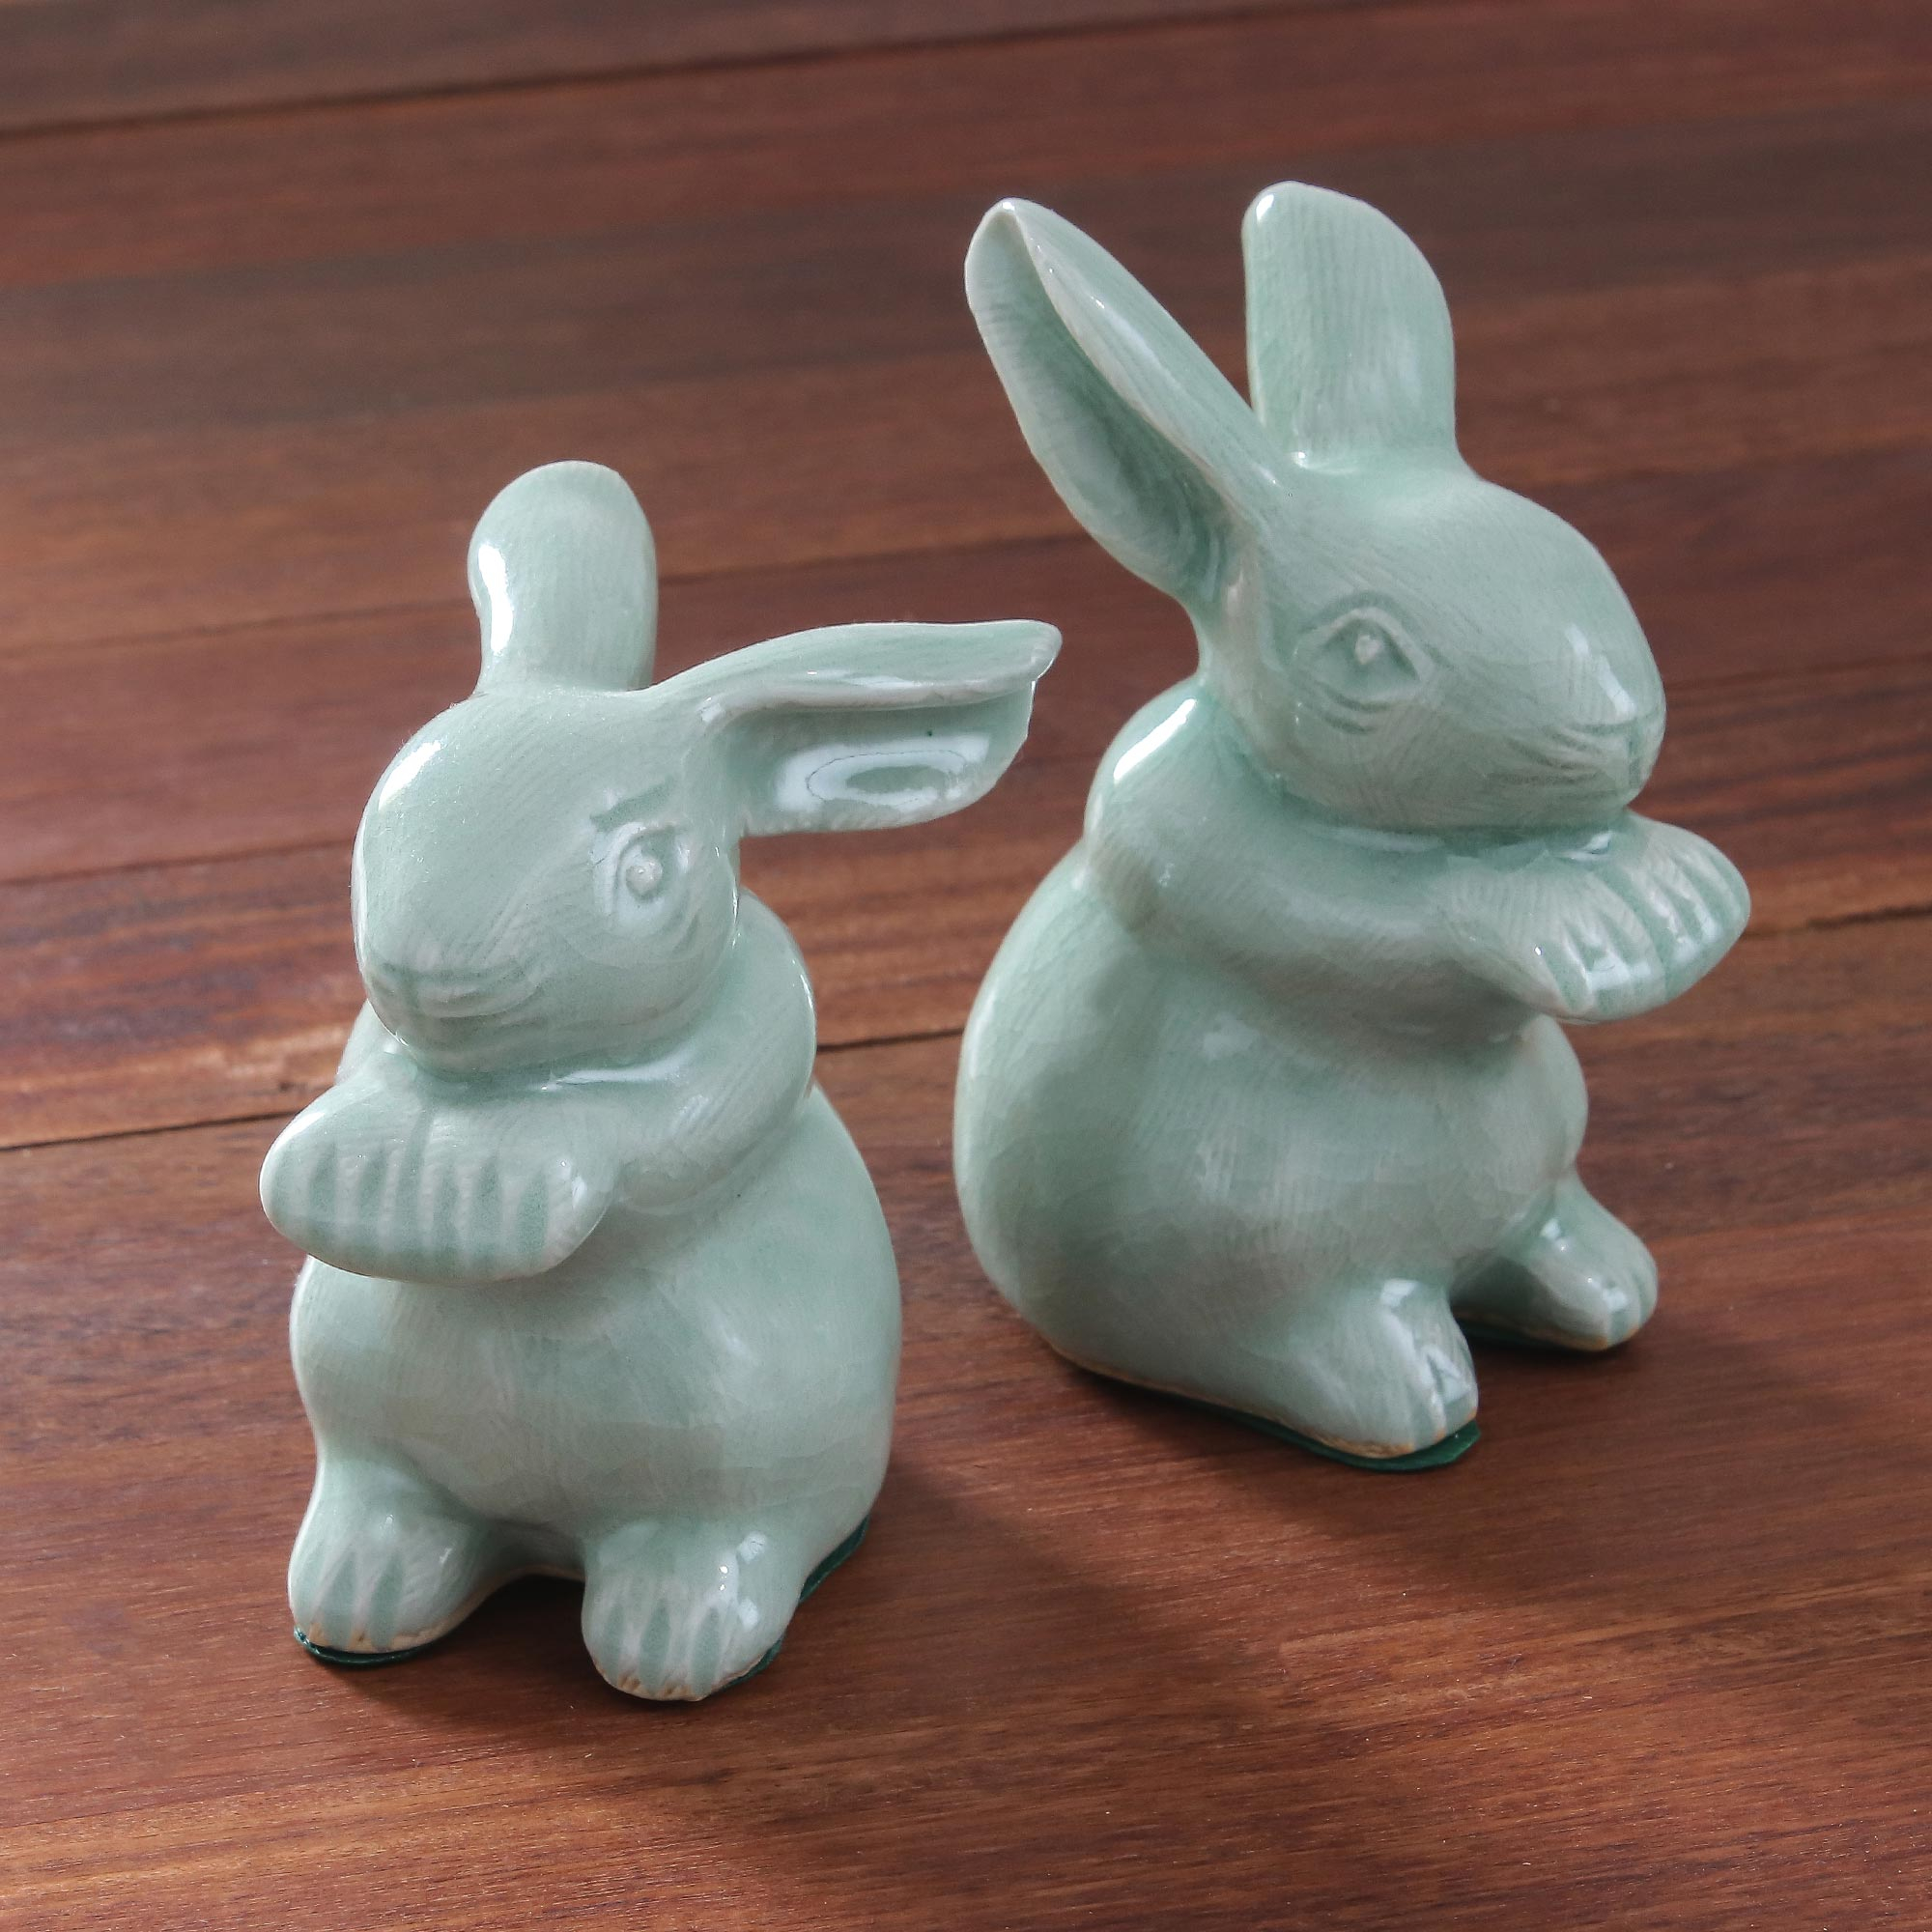 Celadon Ceramic Rabbit Figurines from Thailand (Pair) - Green